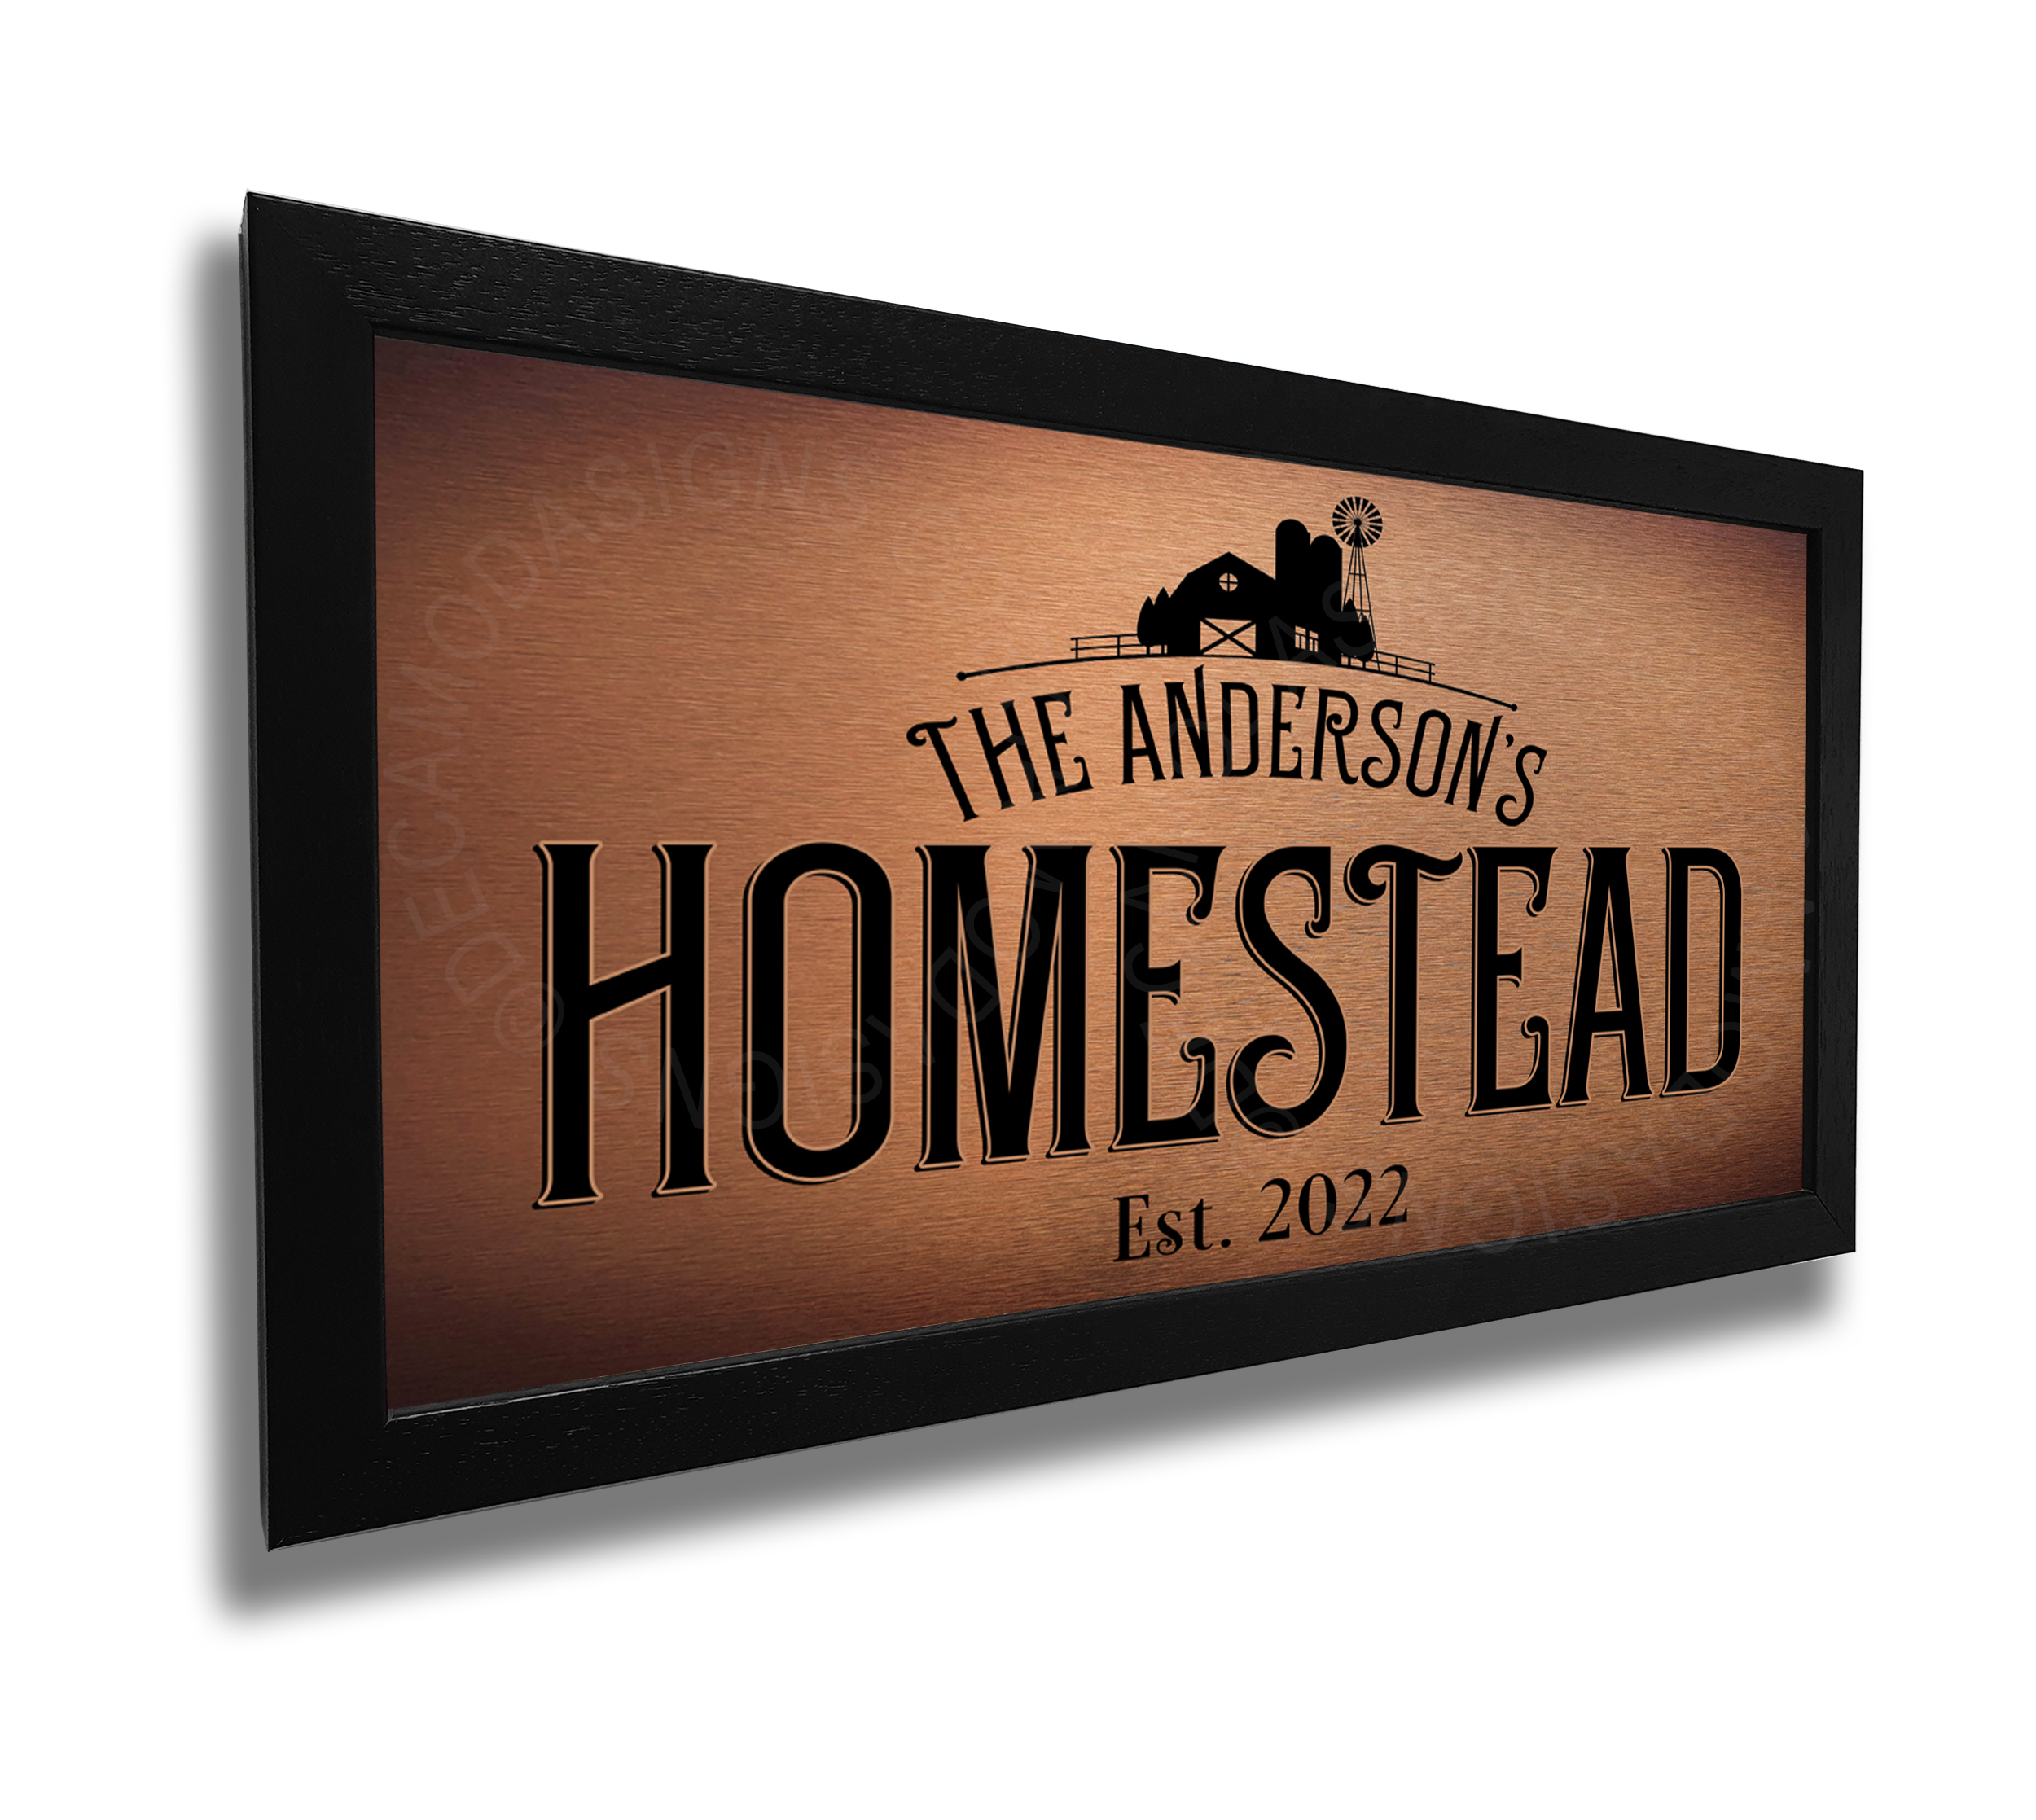 Homestead Sign